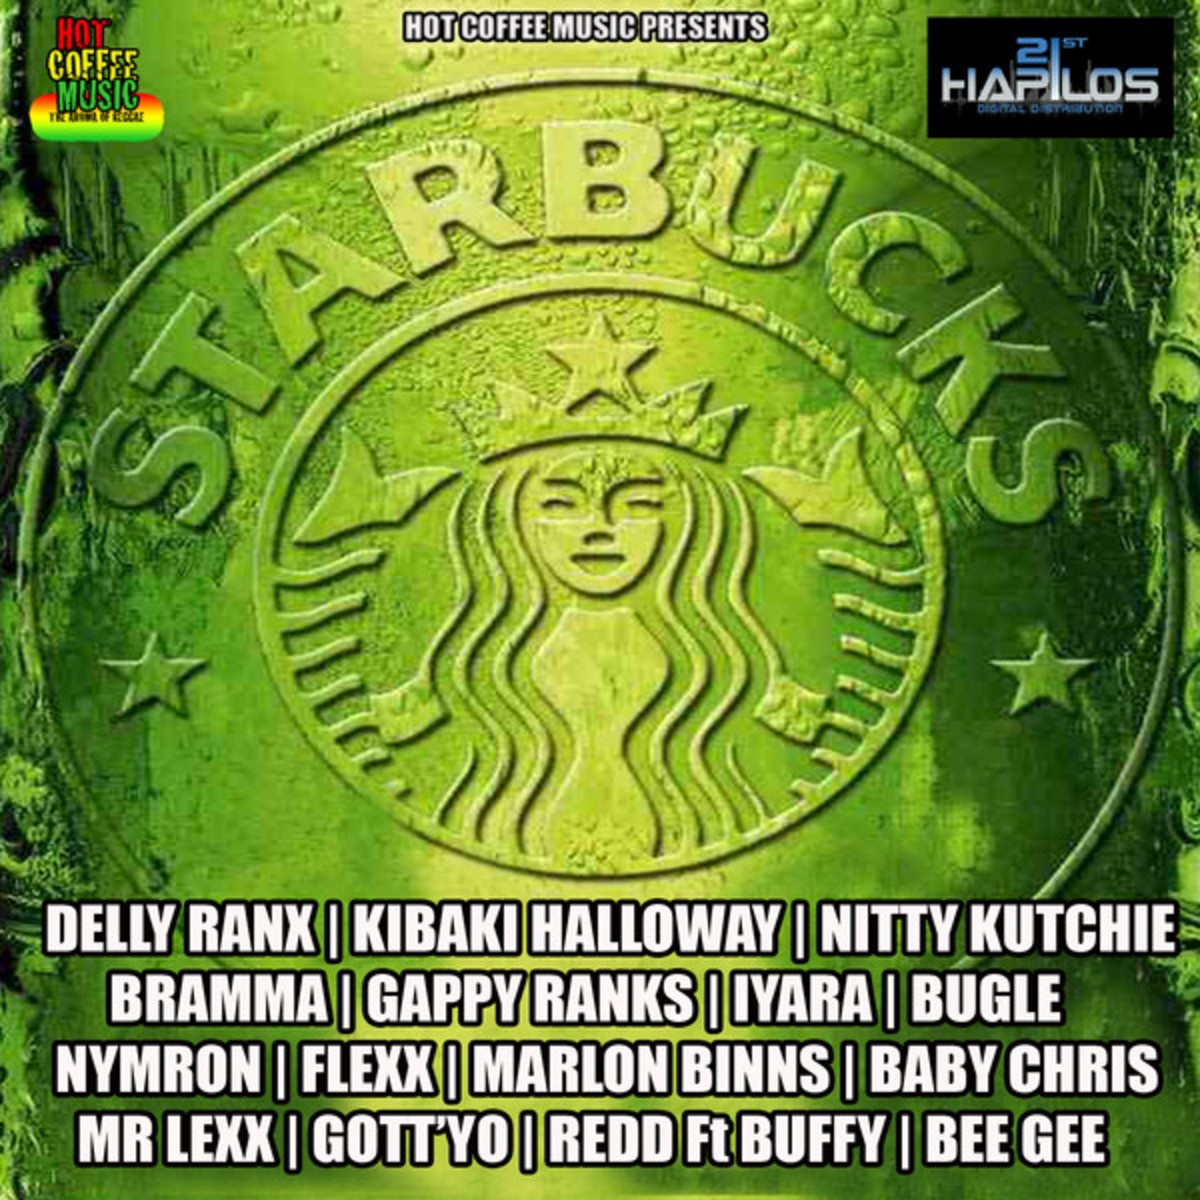 Starbucks Riddim - Produced By Hot Coffee Music